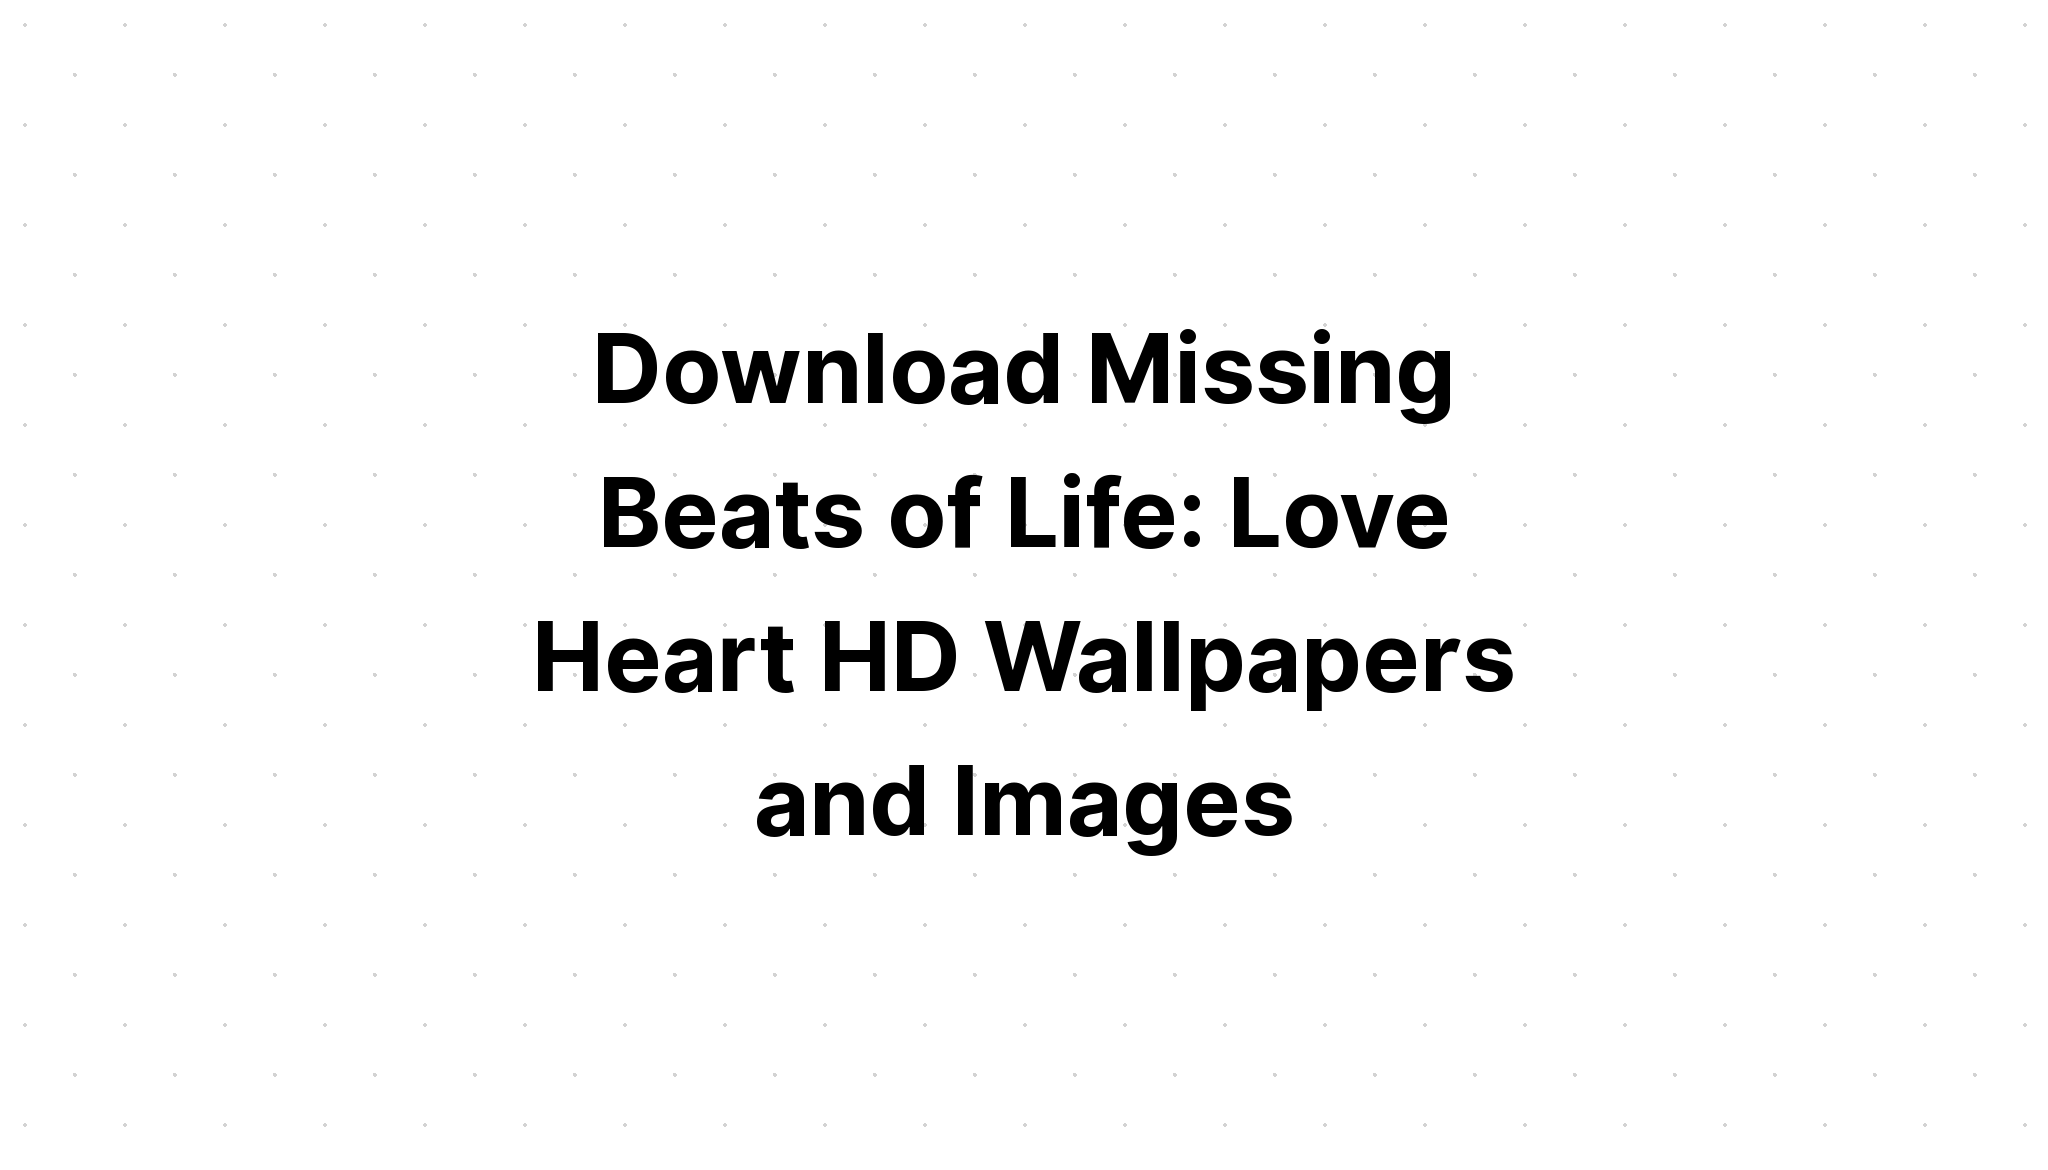 Download Love Hearts SVG File